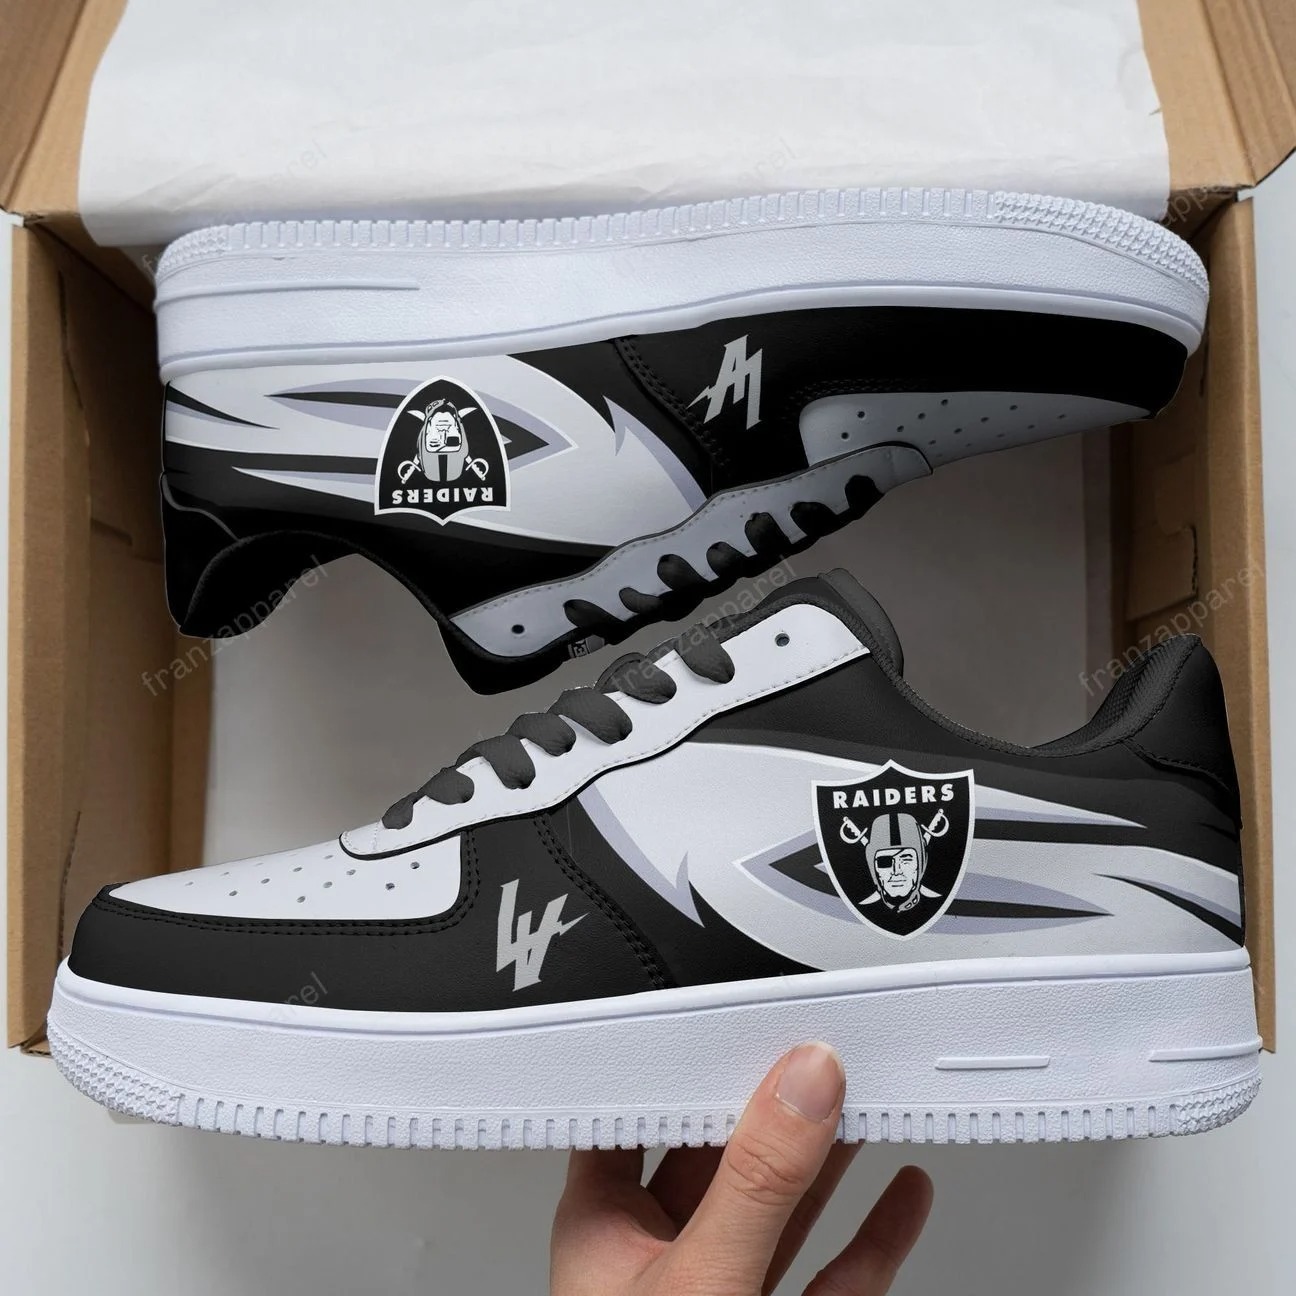 Las Vegas Raiders Black Air force 1 shoes